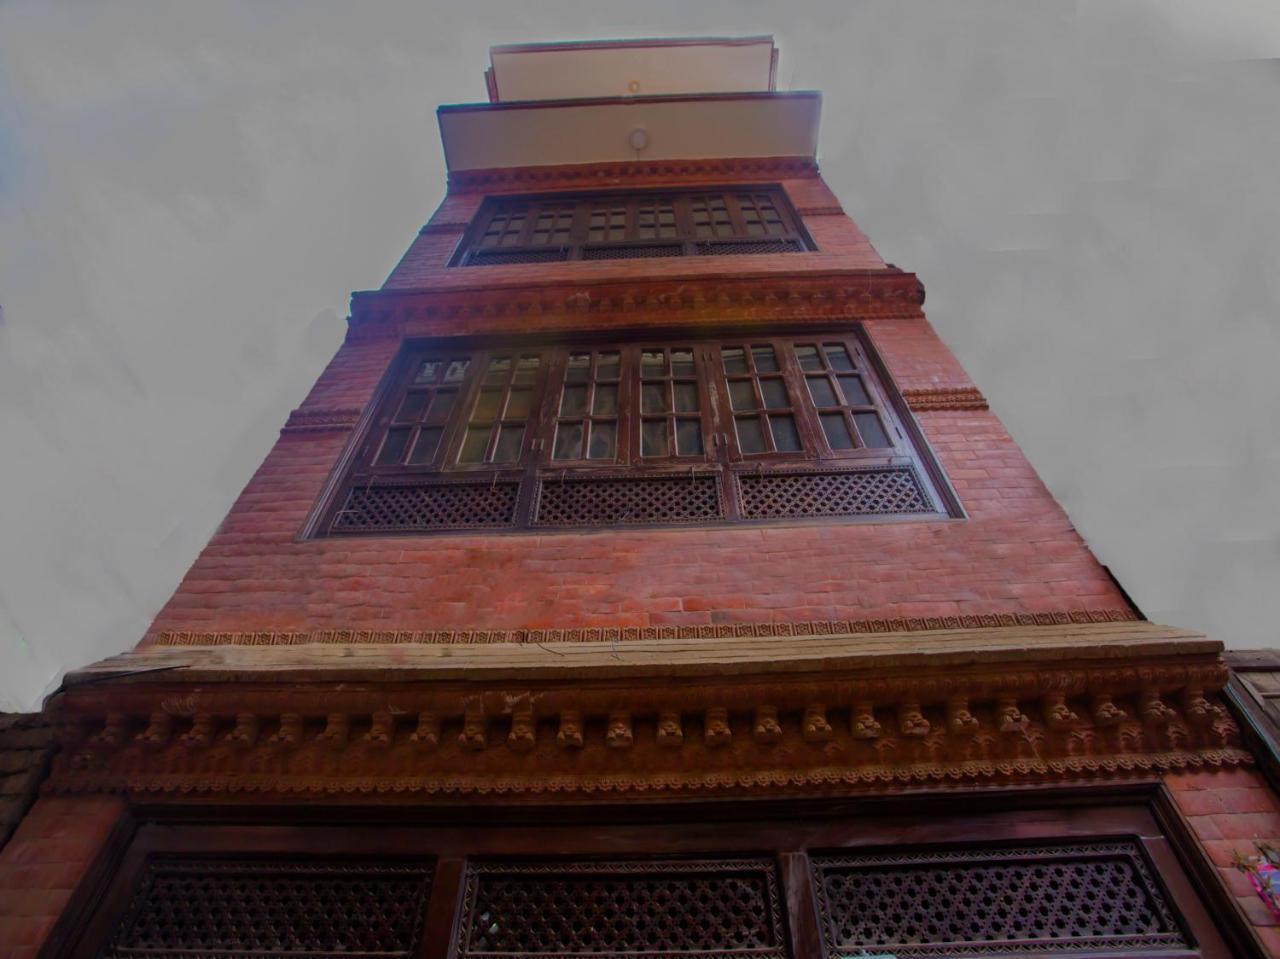 Sweet Home Bhaktapur Exterior photo